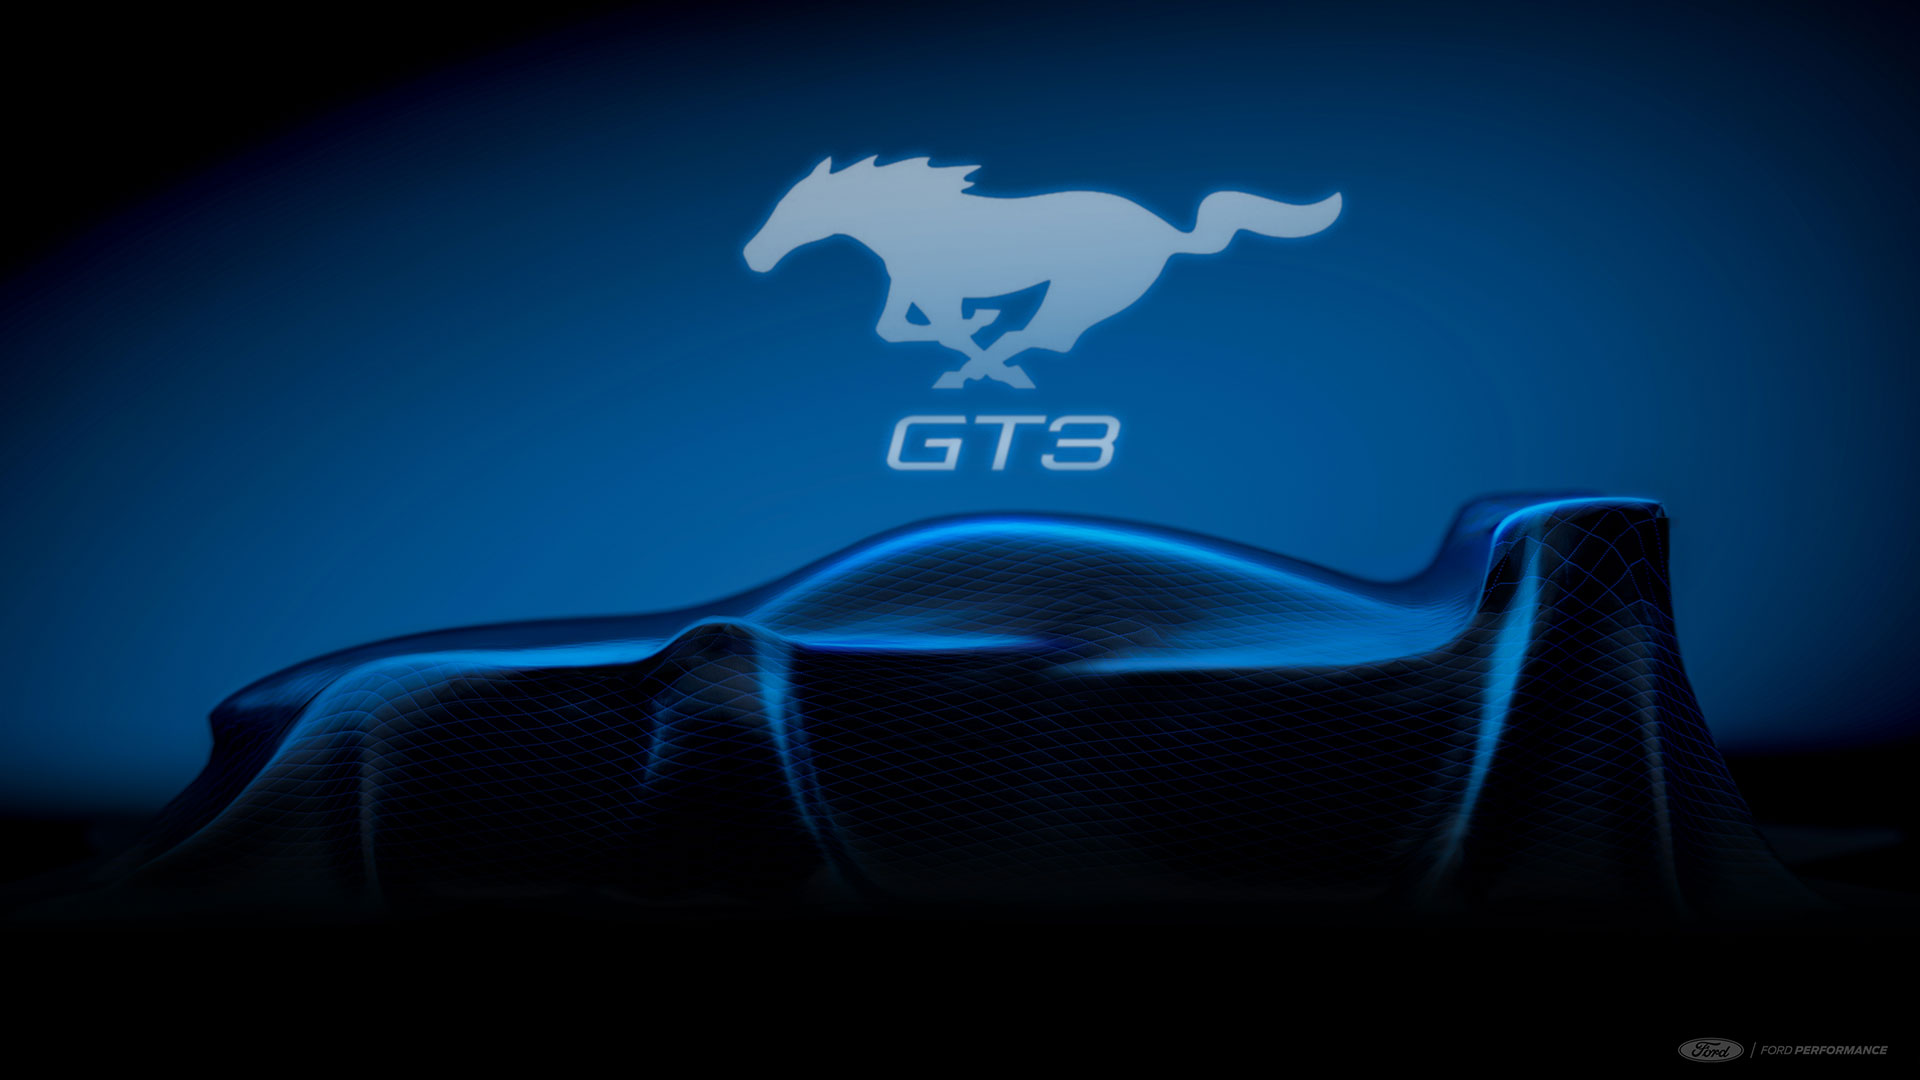 Mustang GT3 race car